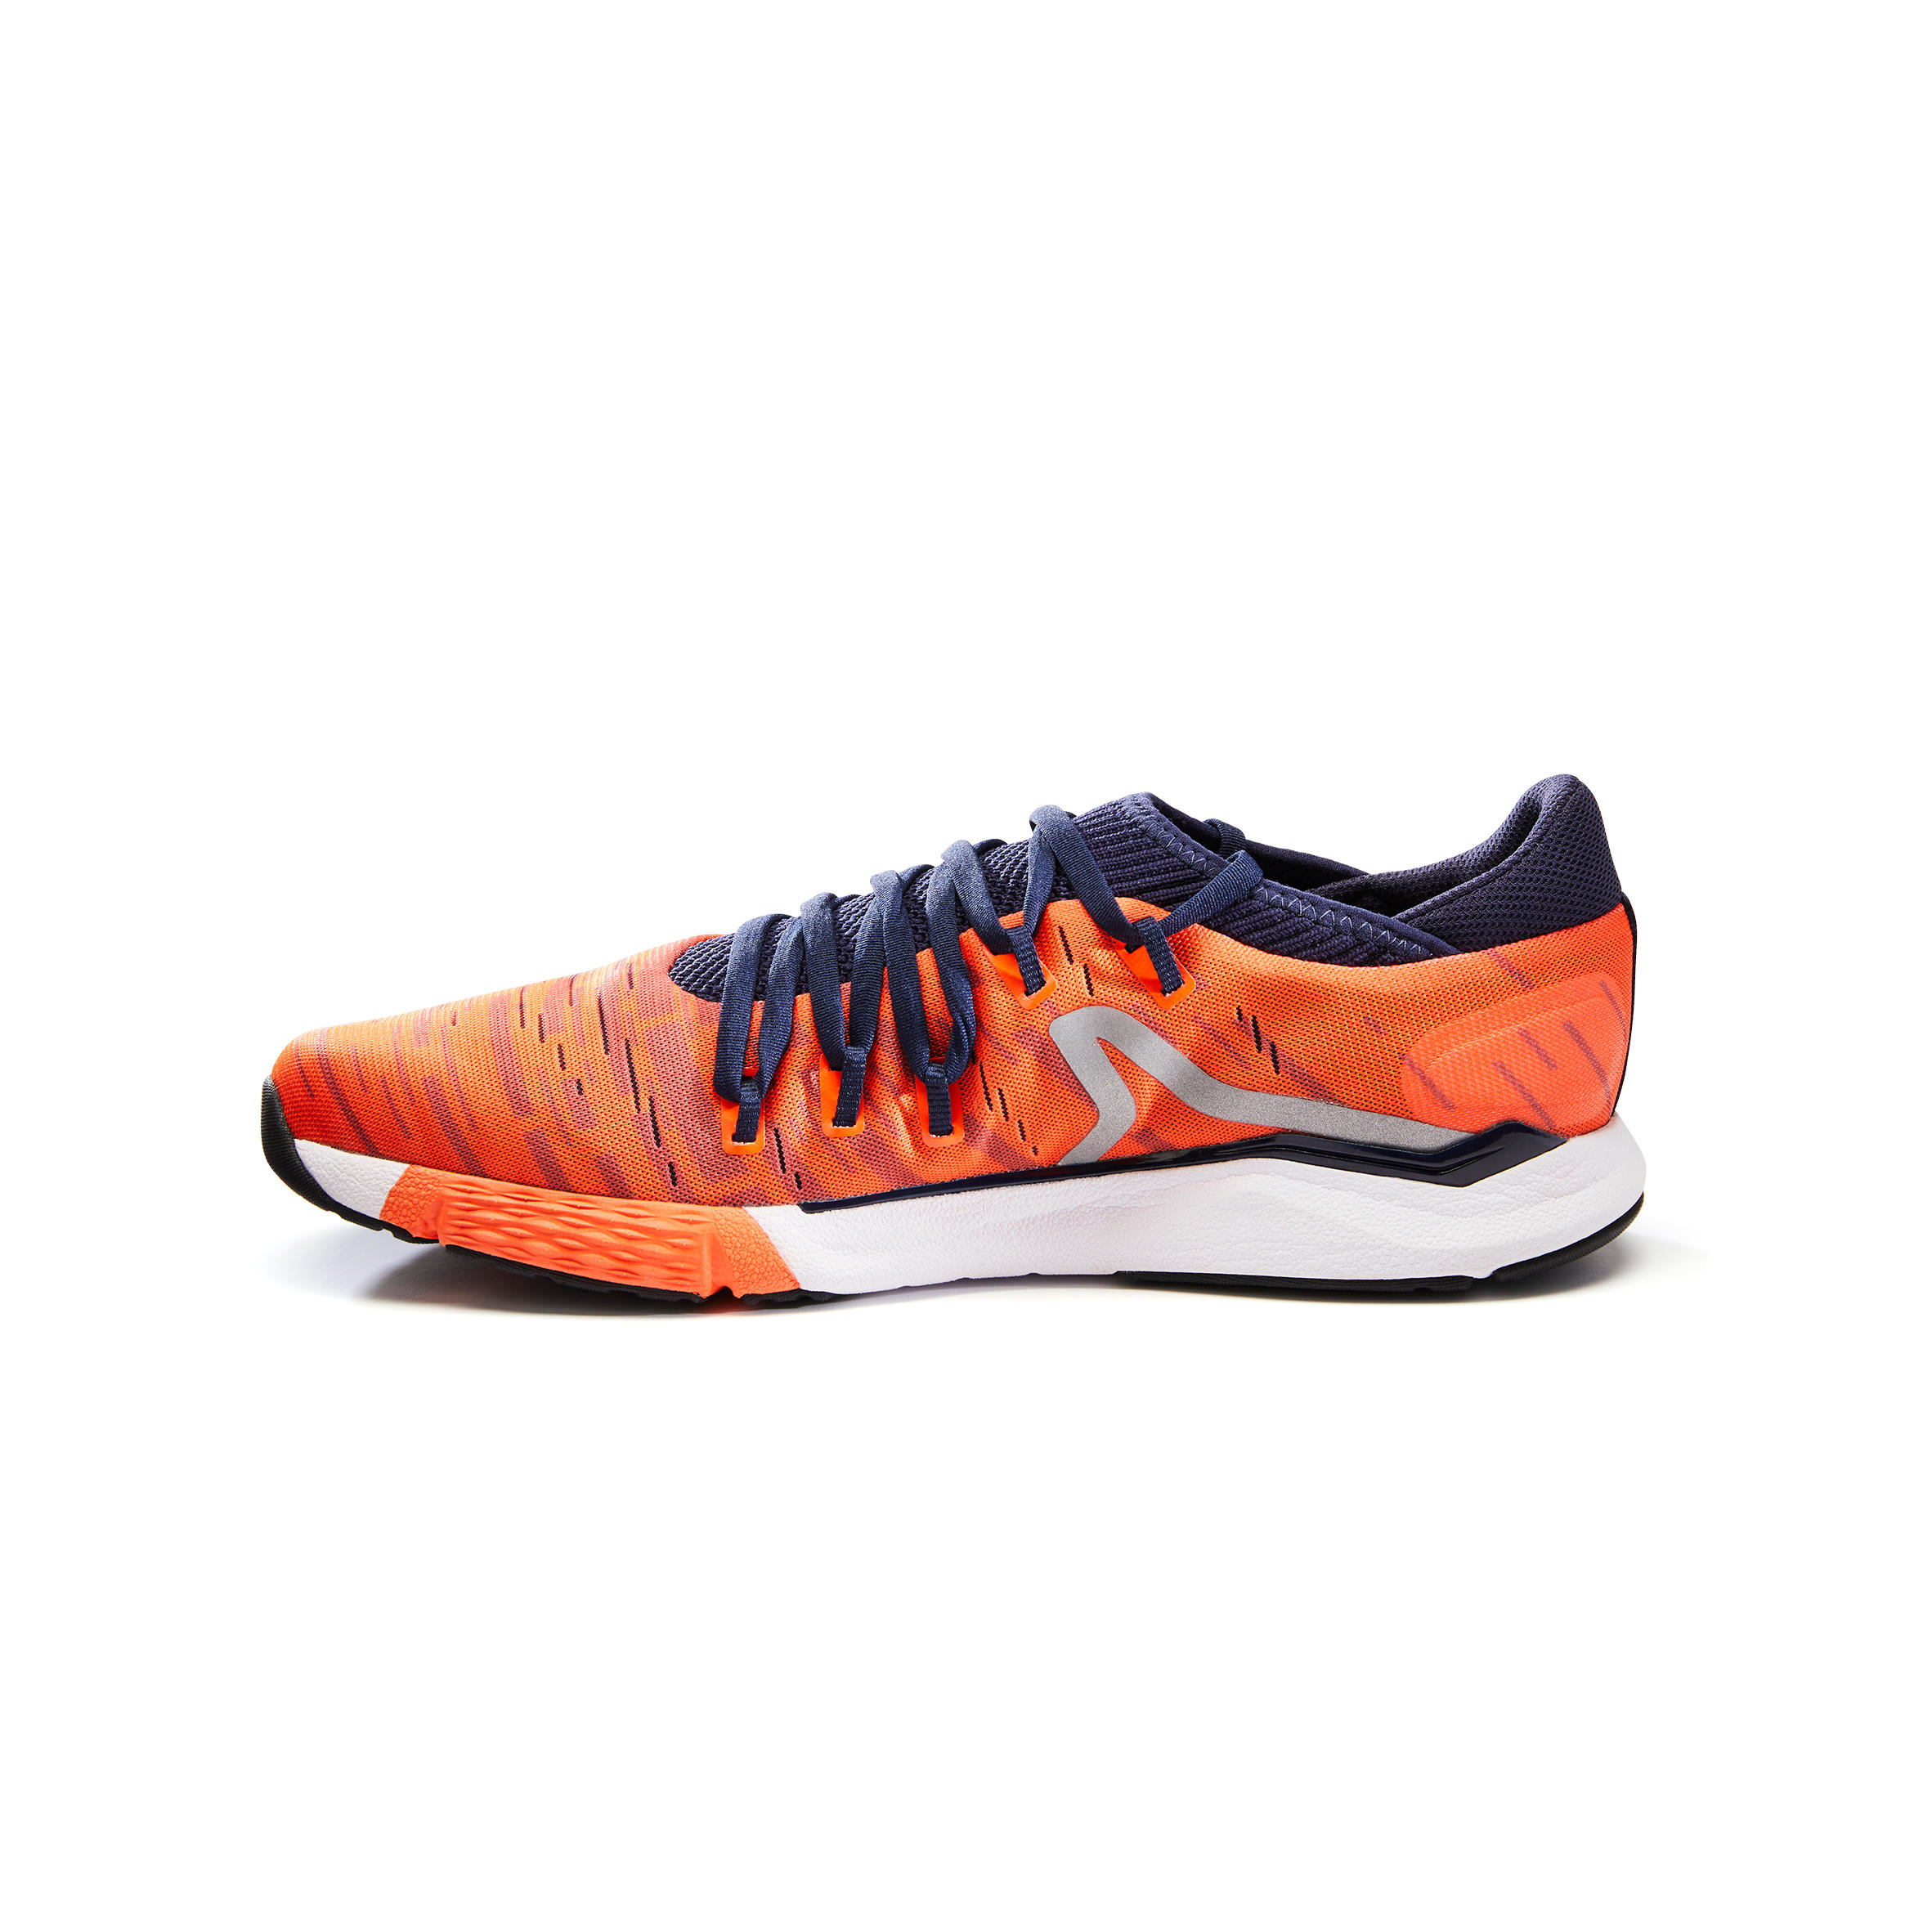 RW 900 Race fitness walking shoes - orange 10/12